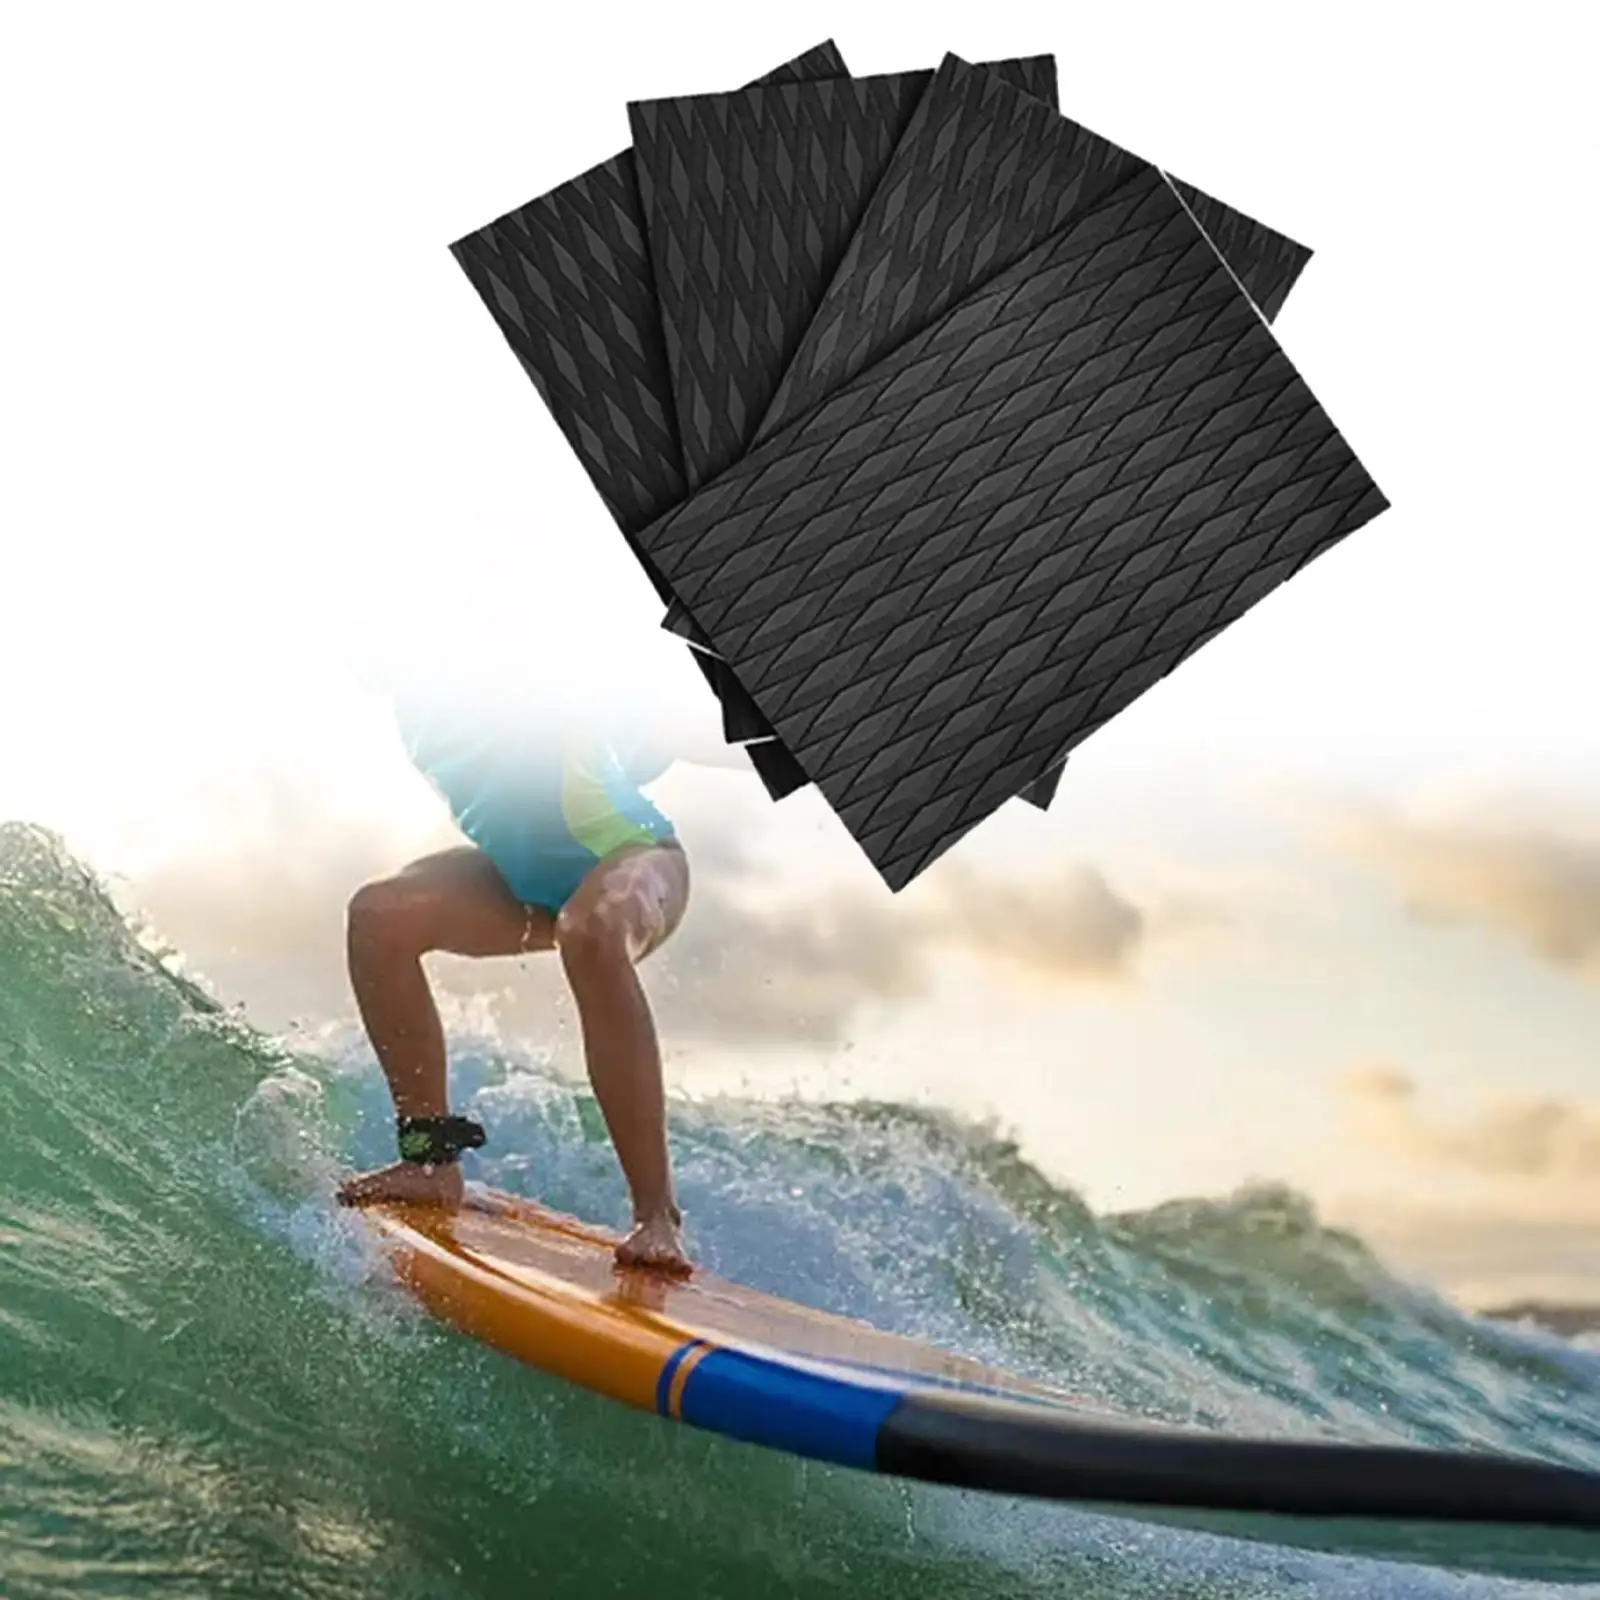 

4 Pieces Deck Grip Mats Anti Slip Surfboard Traction Pads Deck Tail Pad EVA Foam Sheet for Kayak Swimming Pool Step Longboard